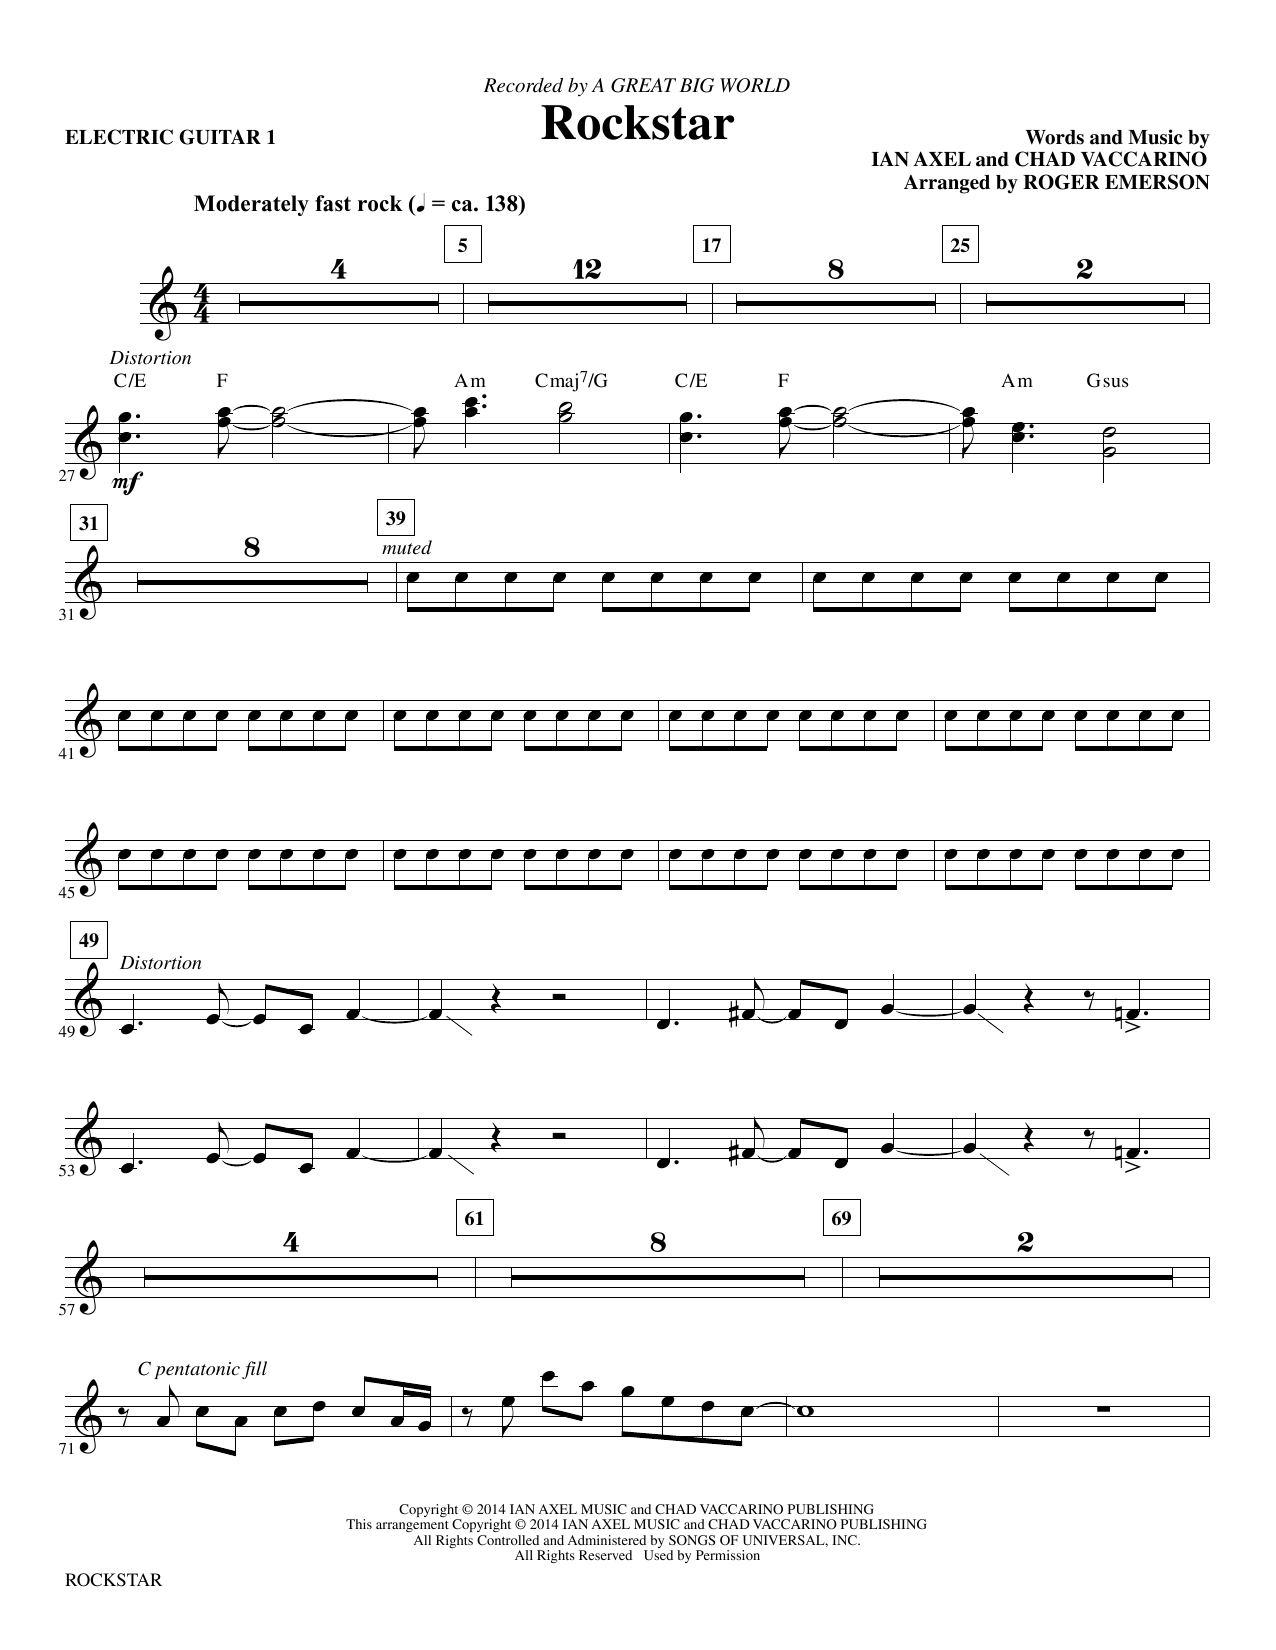 A Great Big World Rockstar - Guitar 1 sheet music notes and chords. Download Printable PDF.